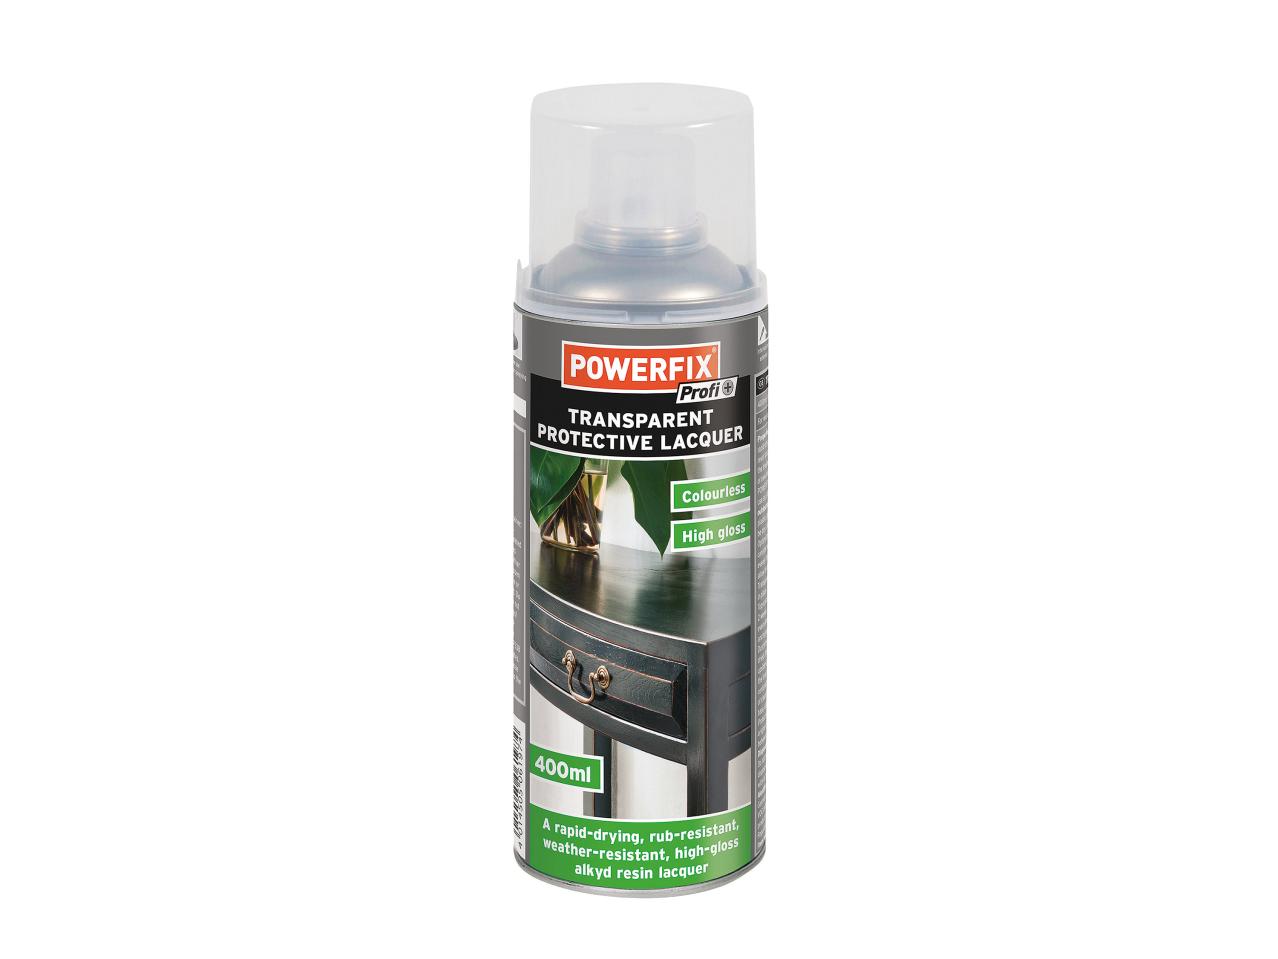 Powerfix Protection Spray Paint1